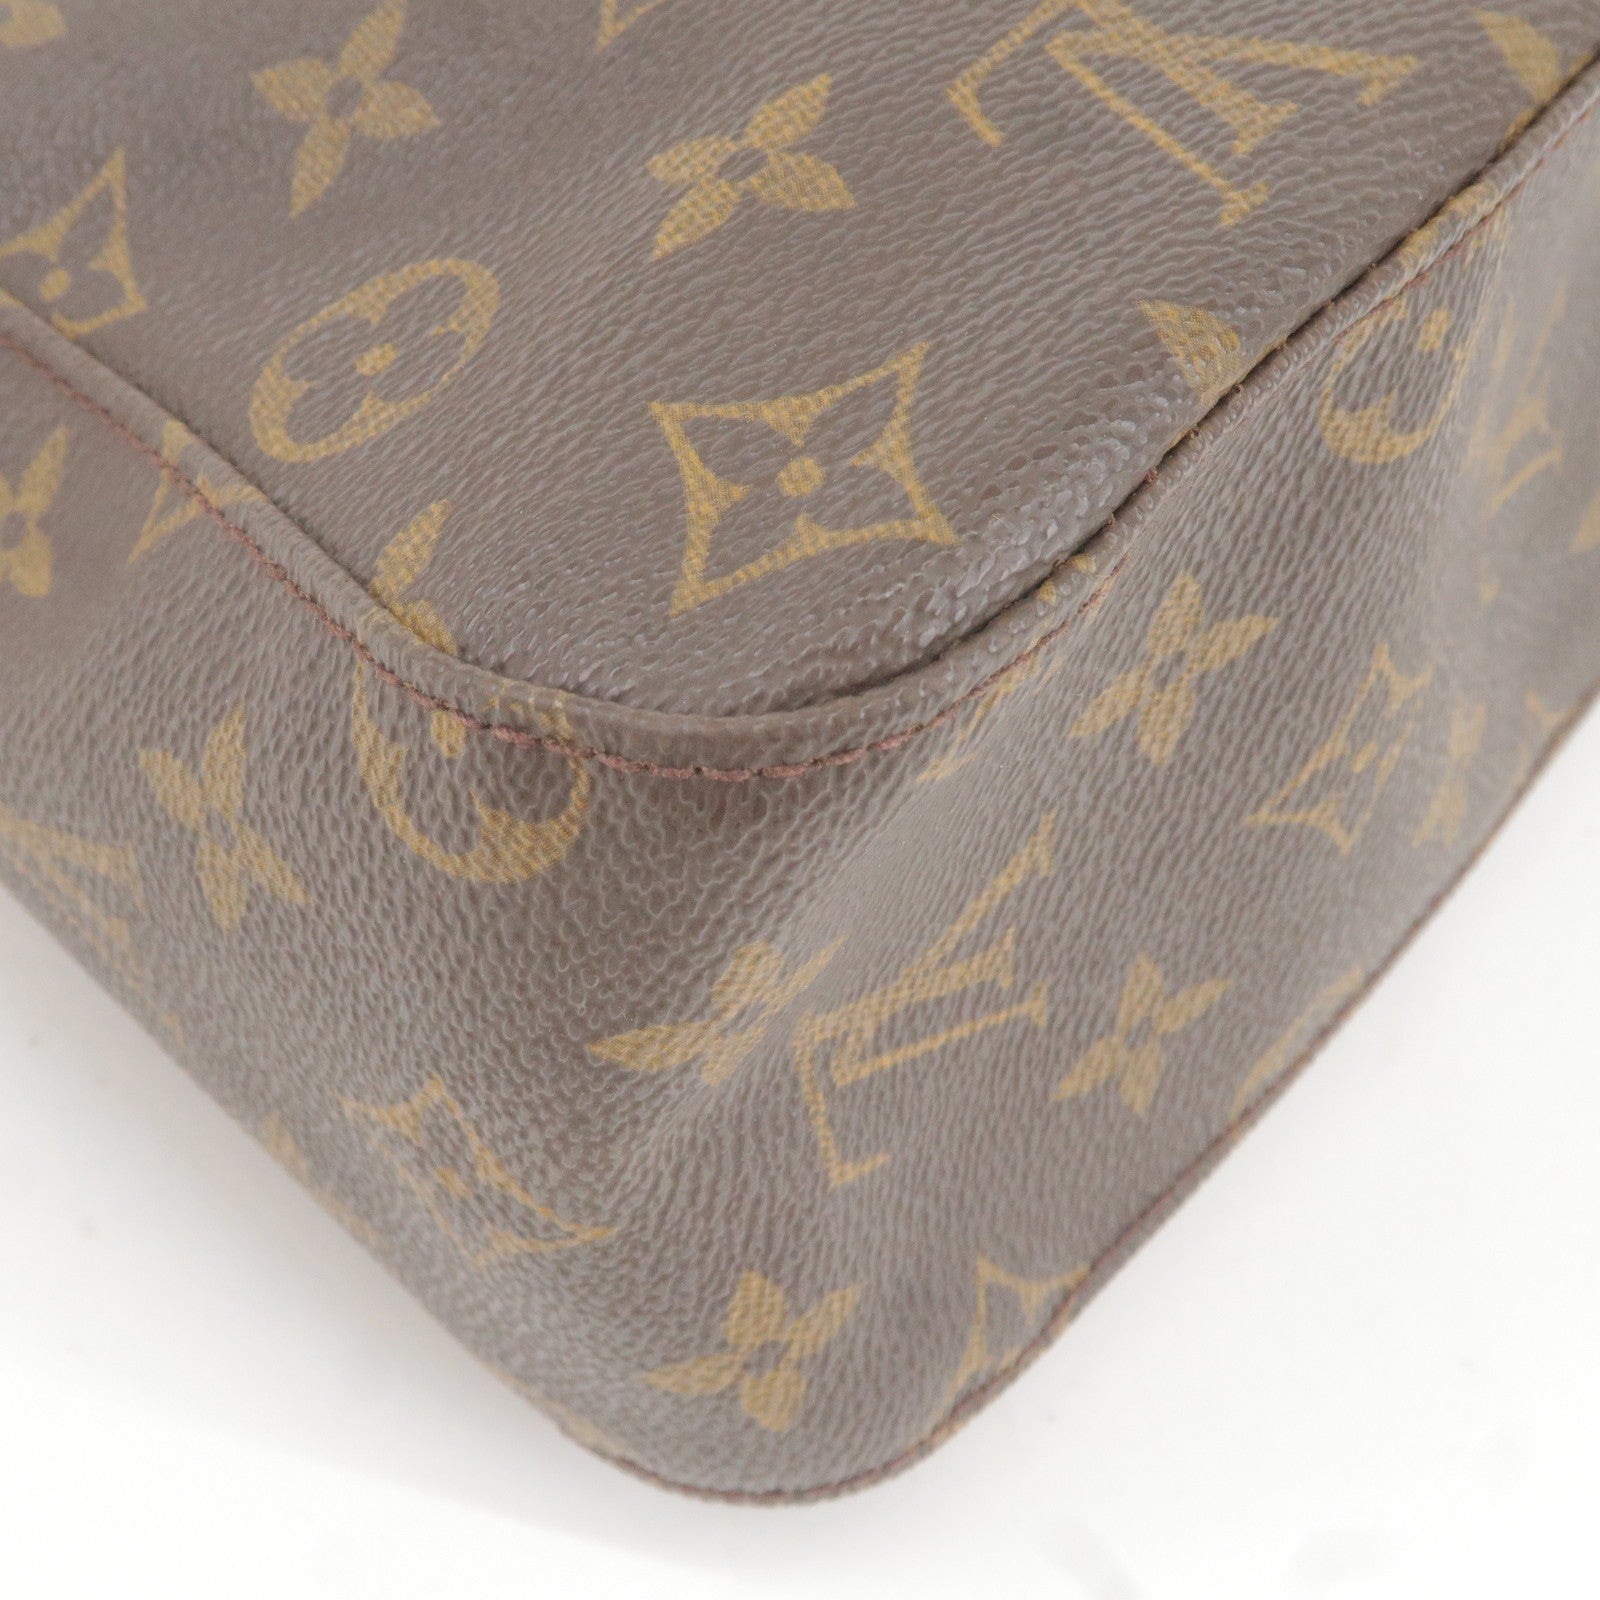 Louis Vuitton Motard shoulder bag in anthracite grey monogram leather